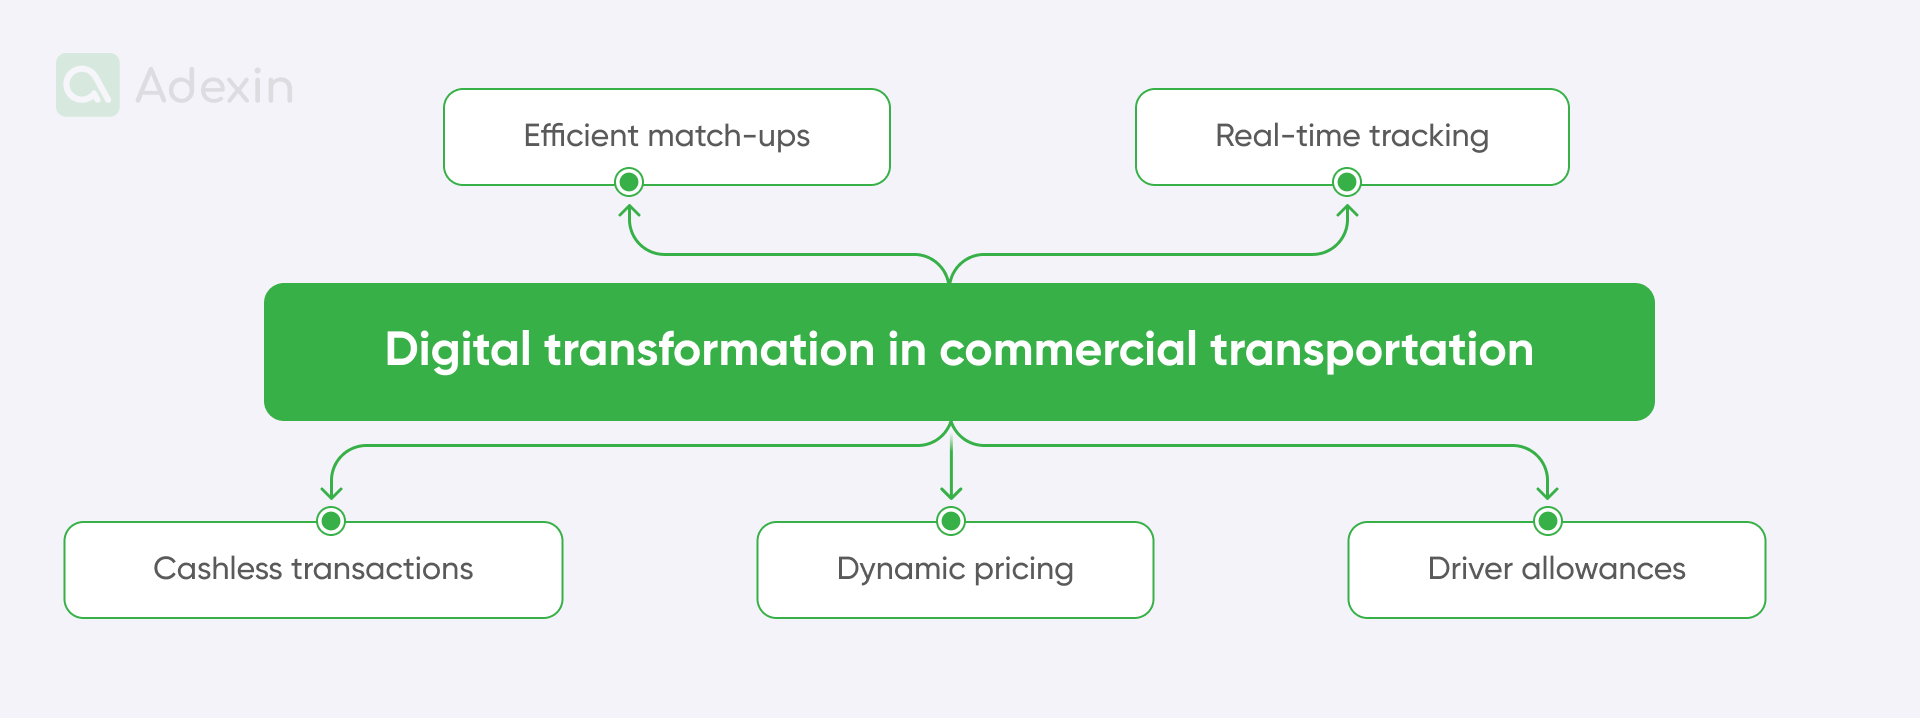 Elements of digital transformation in commercial transportation